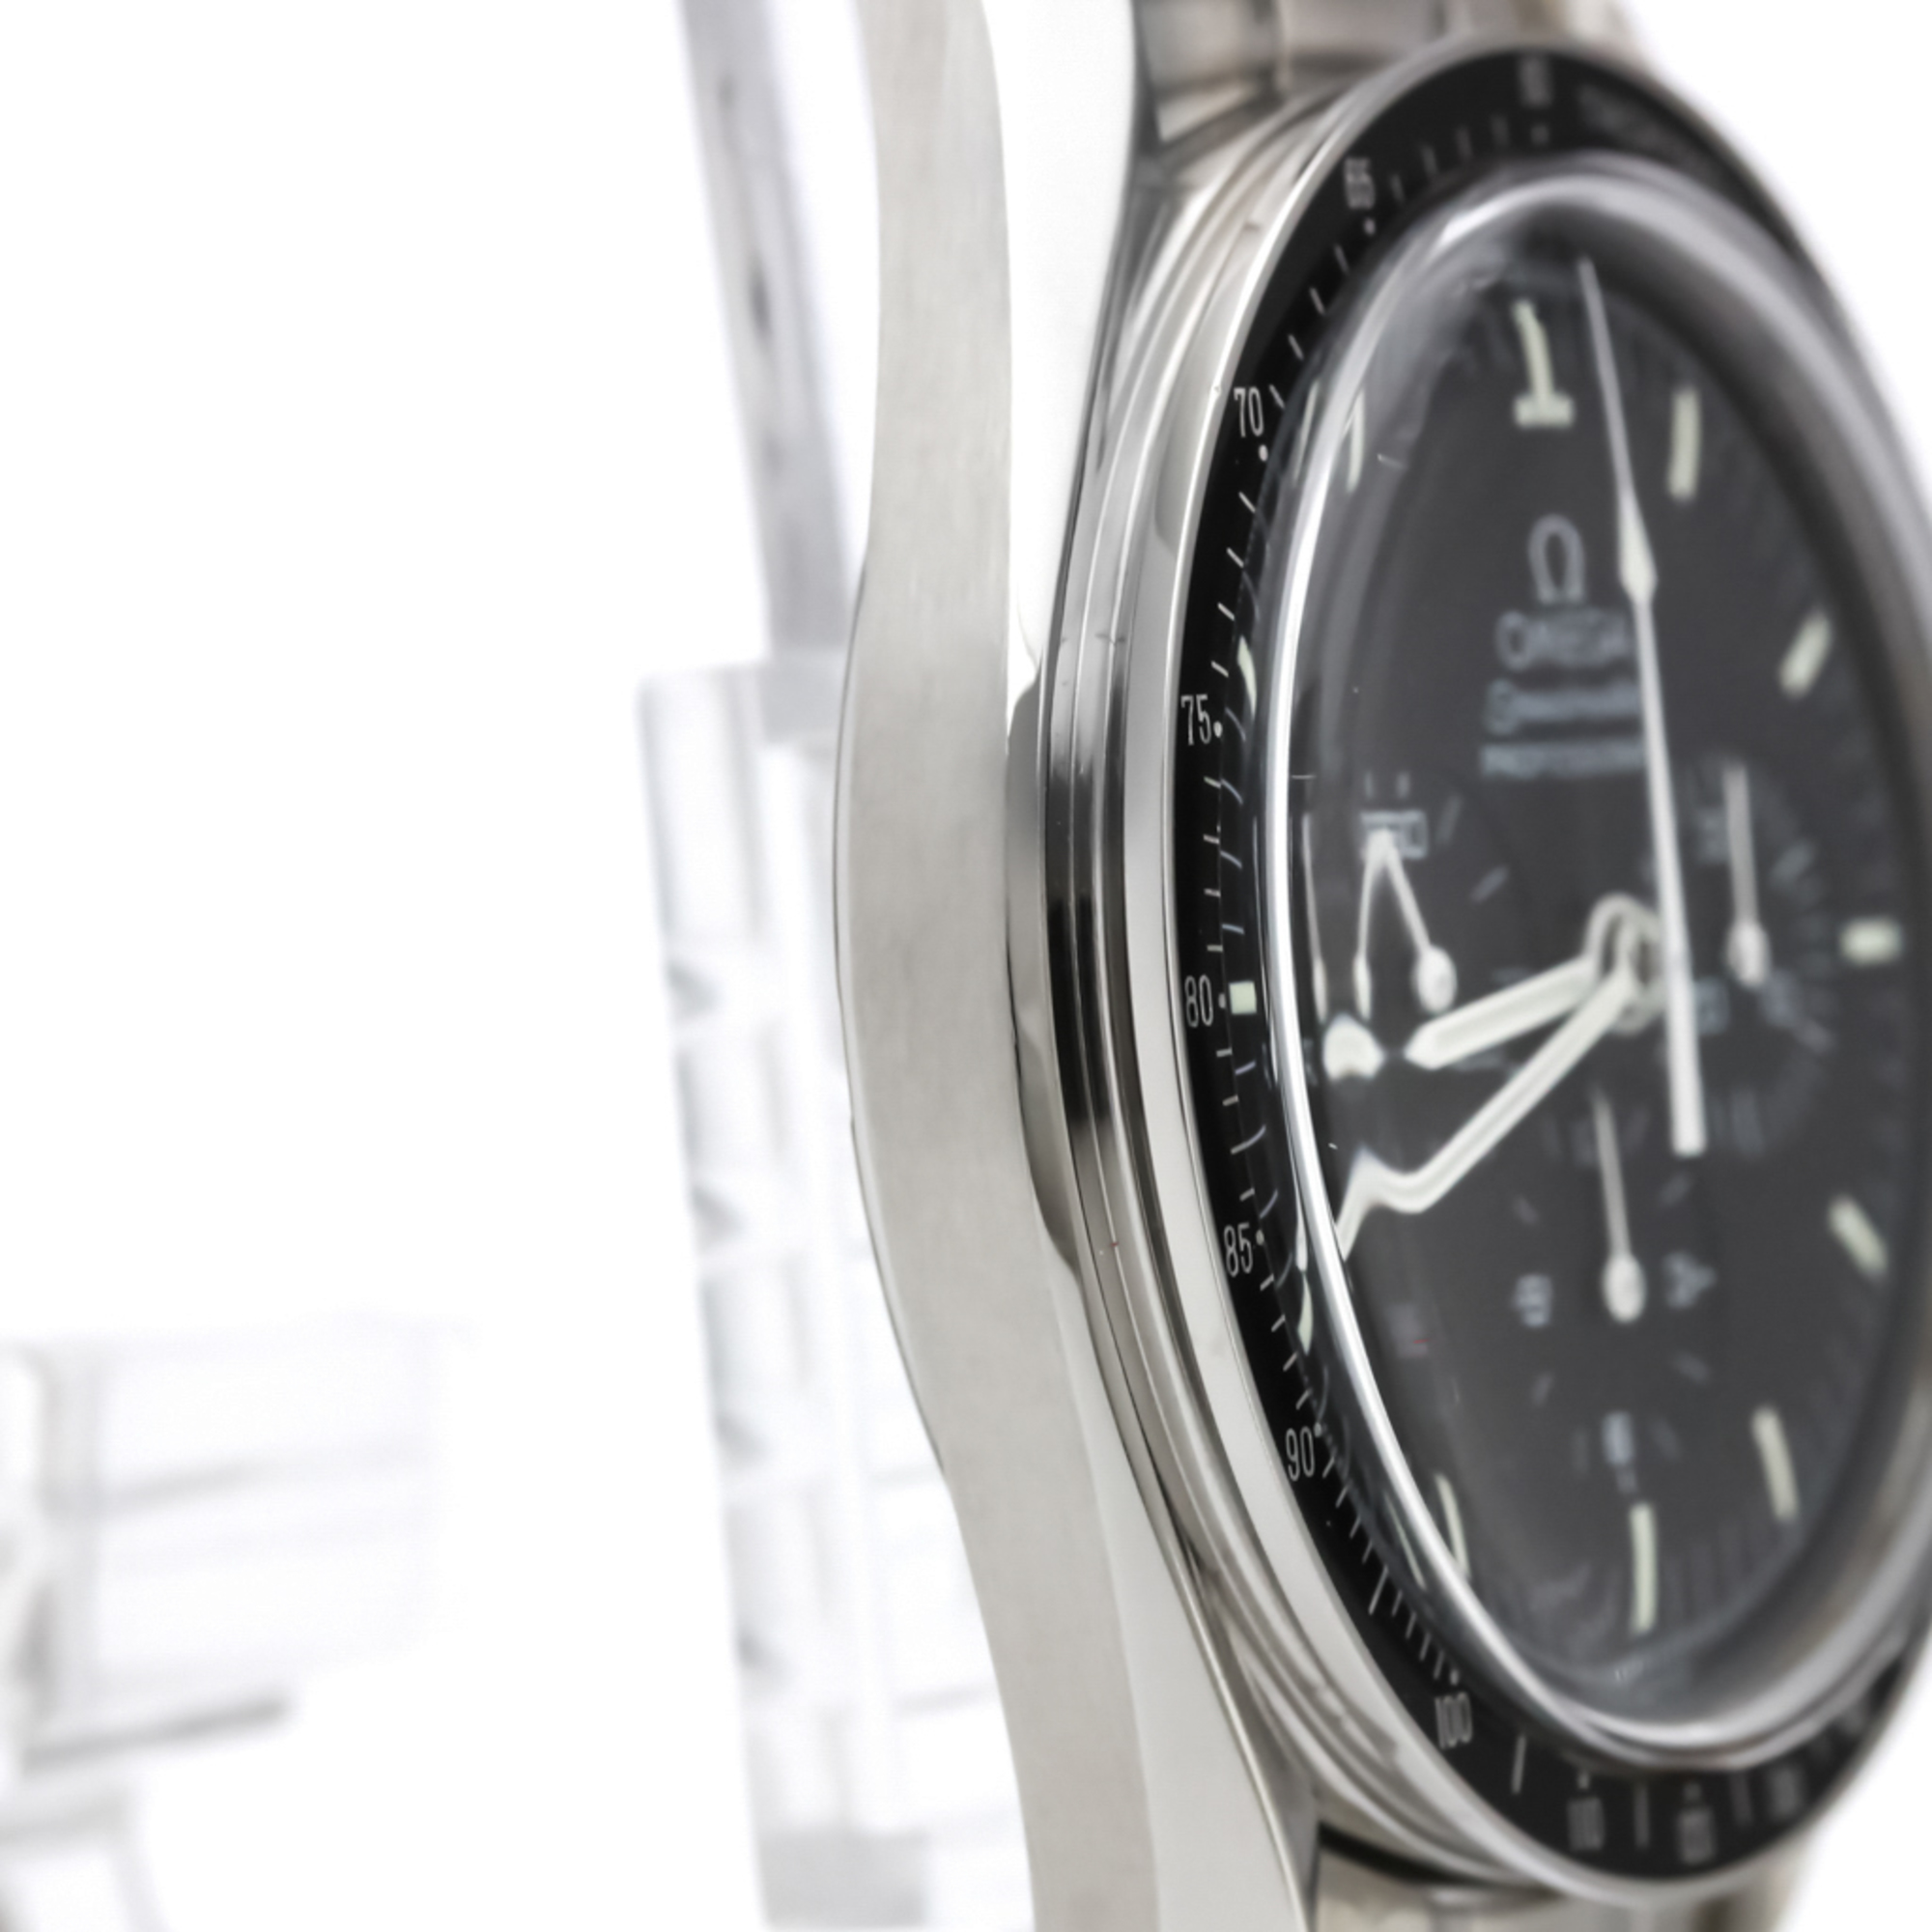 OMEGA Speedmaster Professional Sapphire Back Watch 3572.50